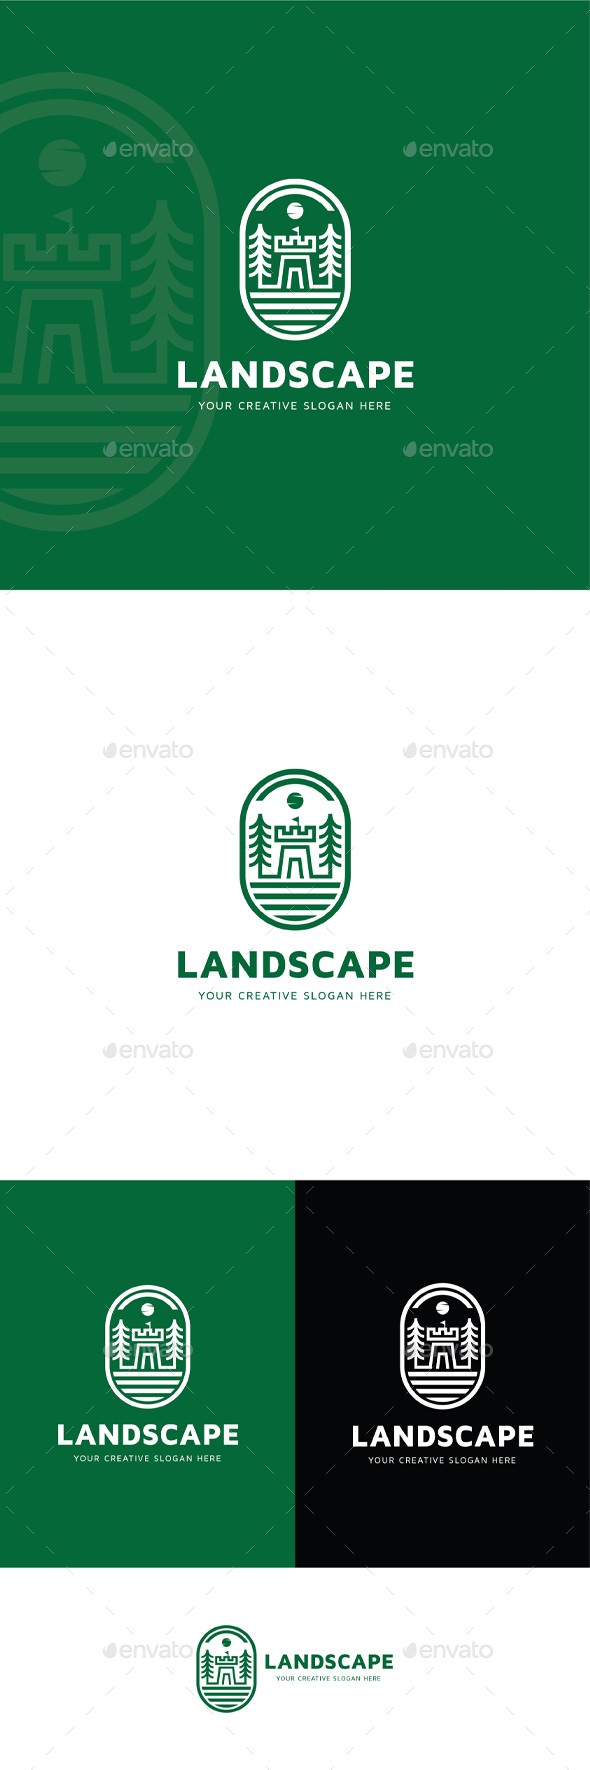 [DOWNLOAD]Landscape - Pine Castle Logo